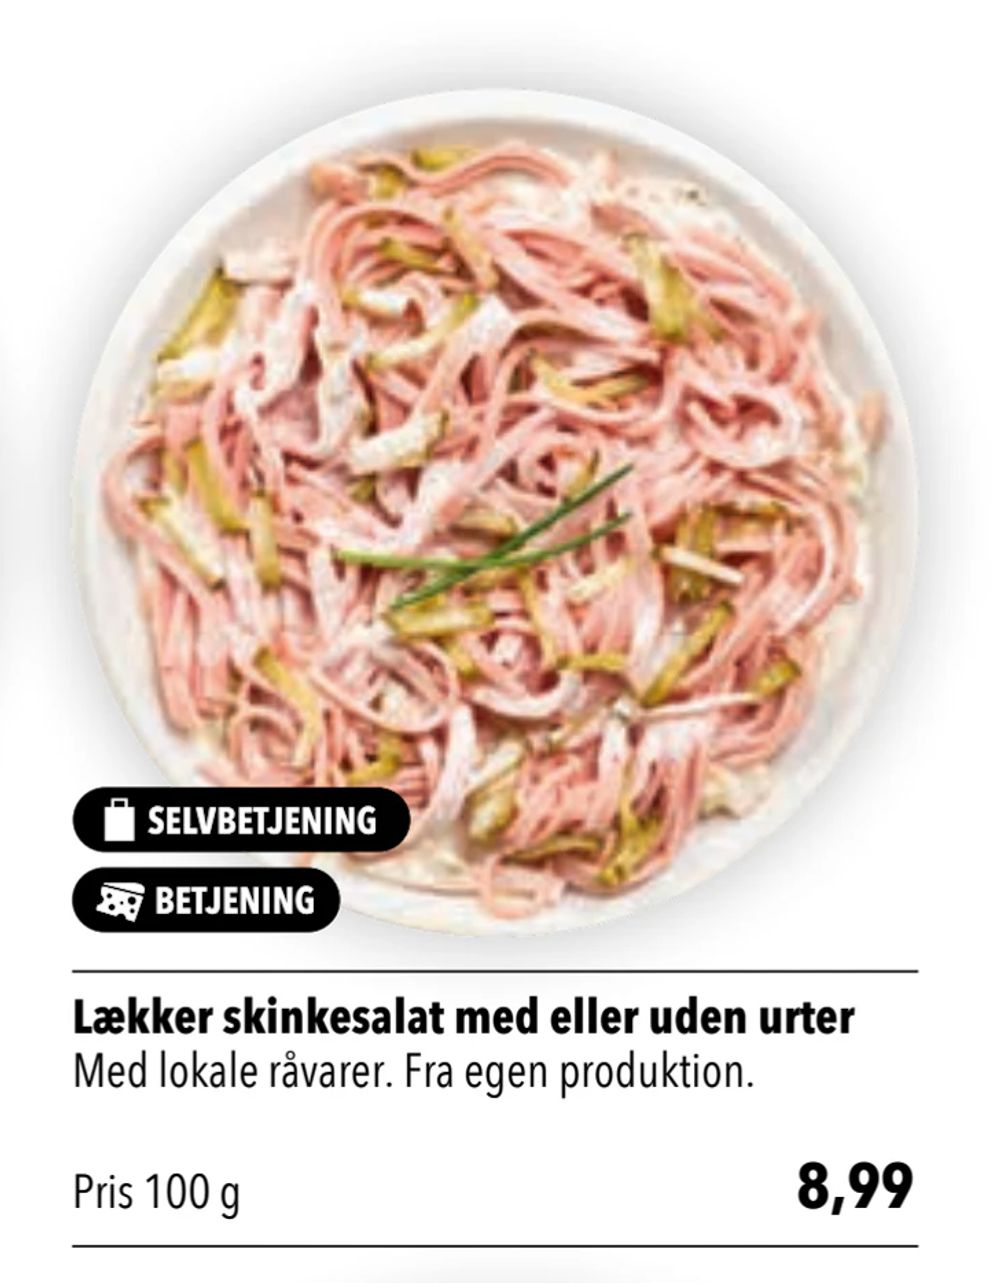 Tilbud på Lækker skinkesalat med eller uden urter fra CITTI til 8,99 kr.